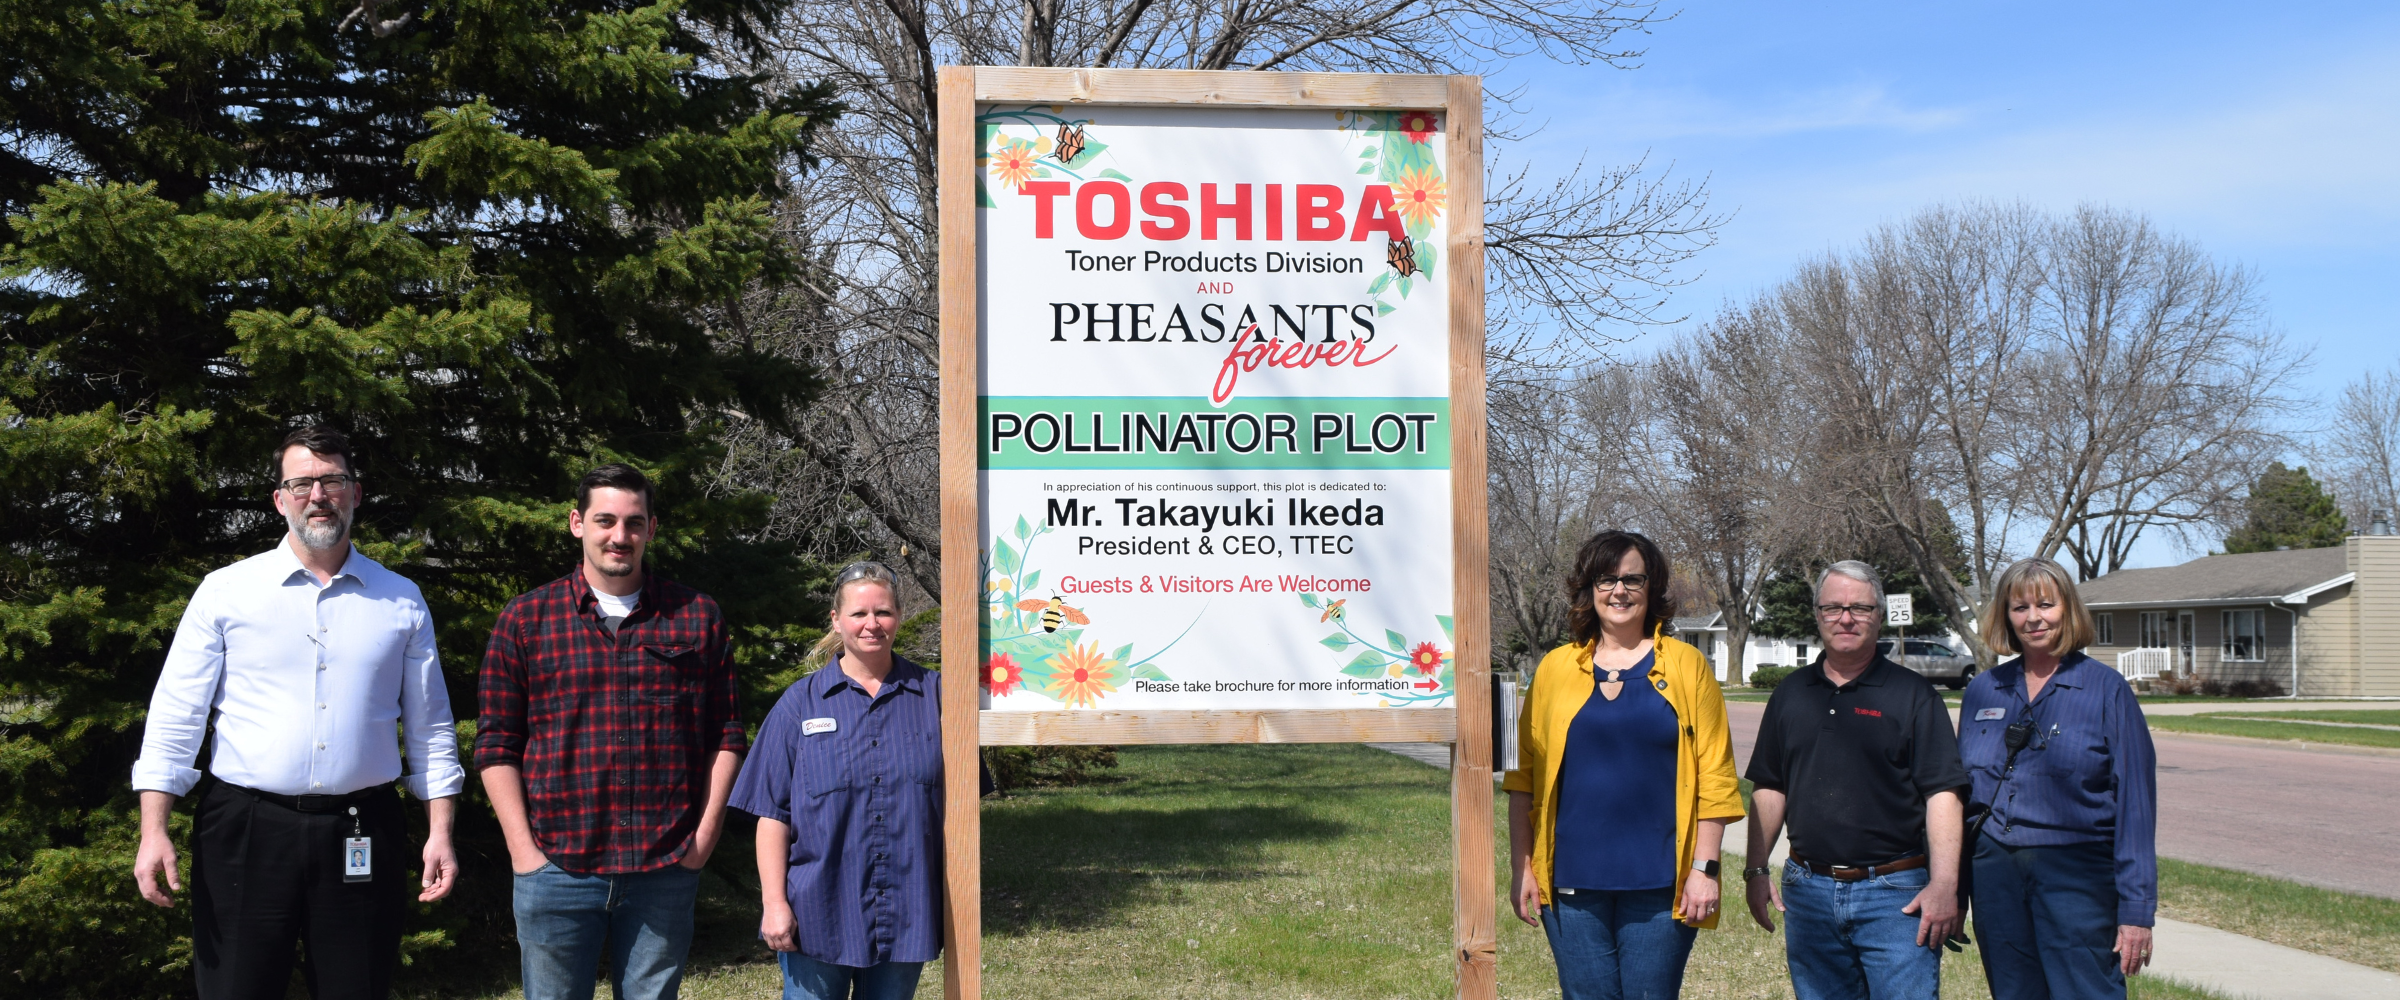 Toshiba Team Promoting Sustainability